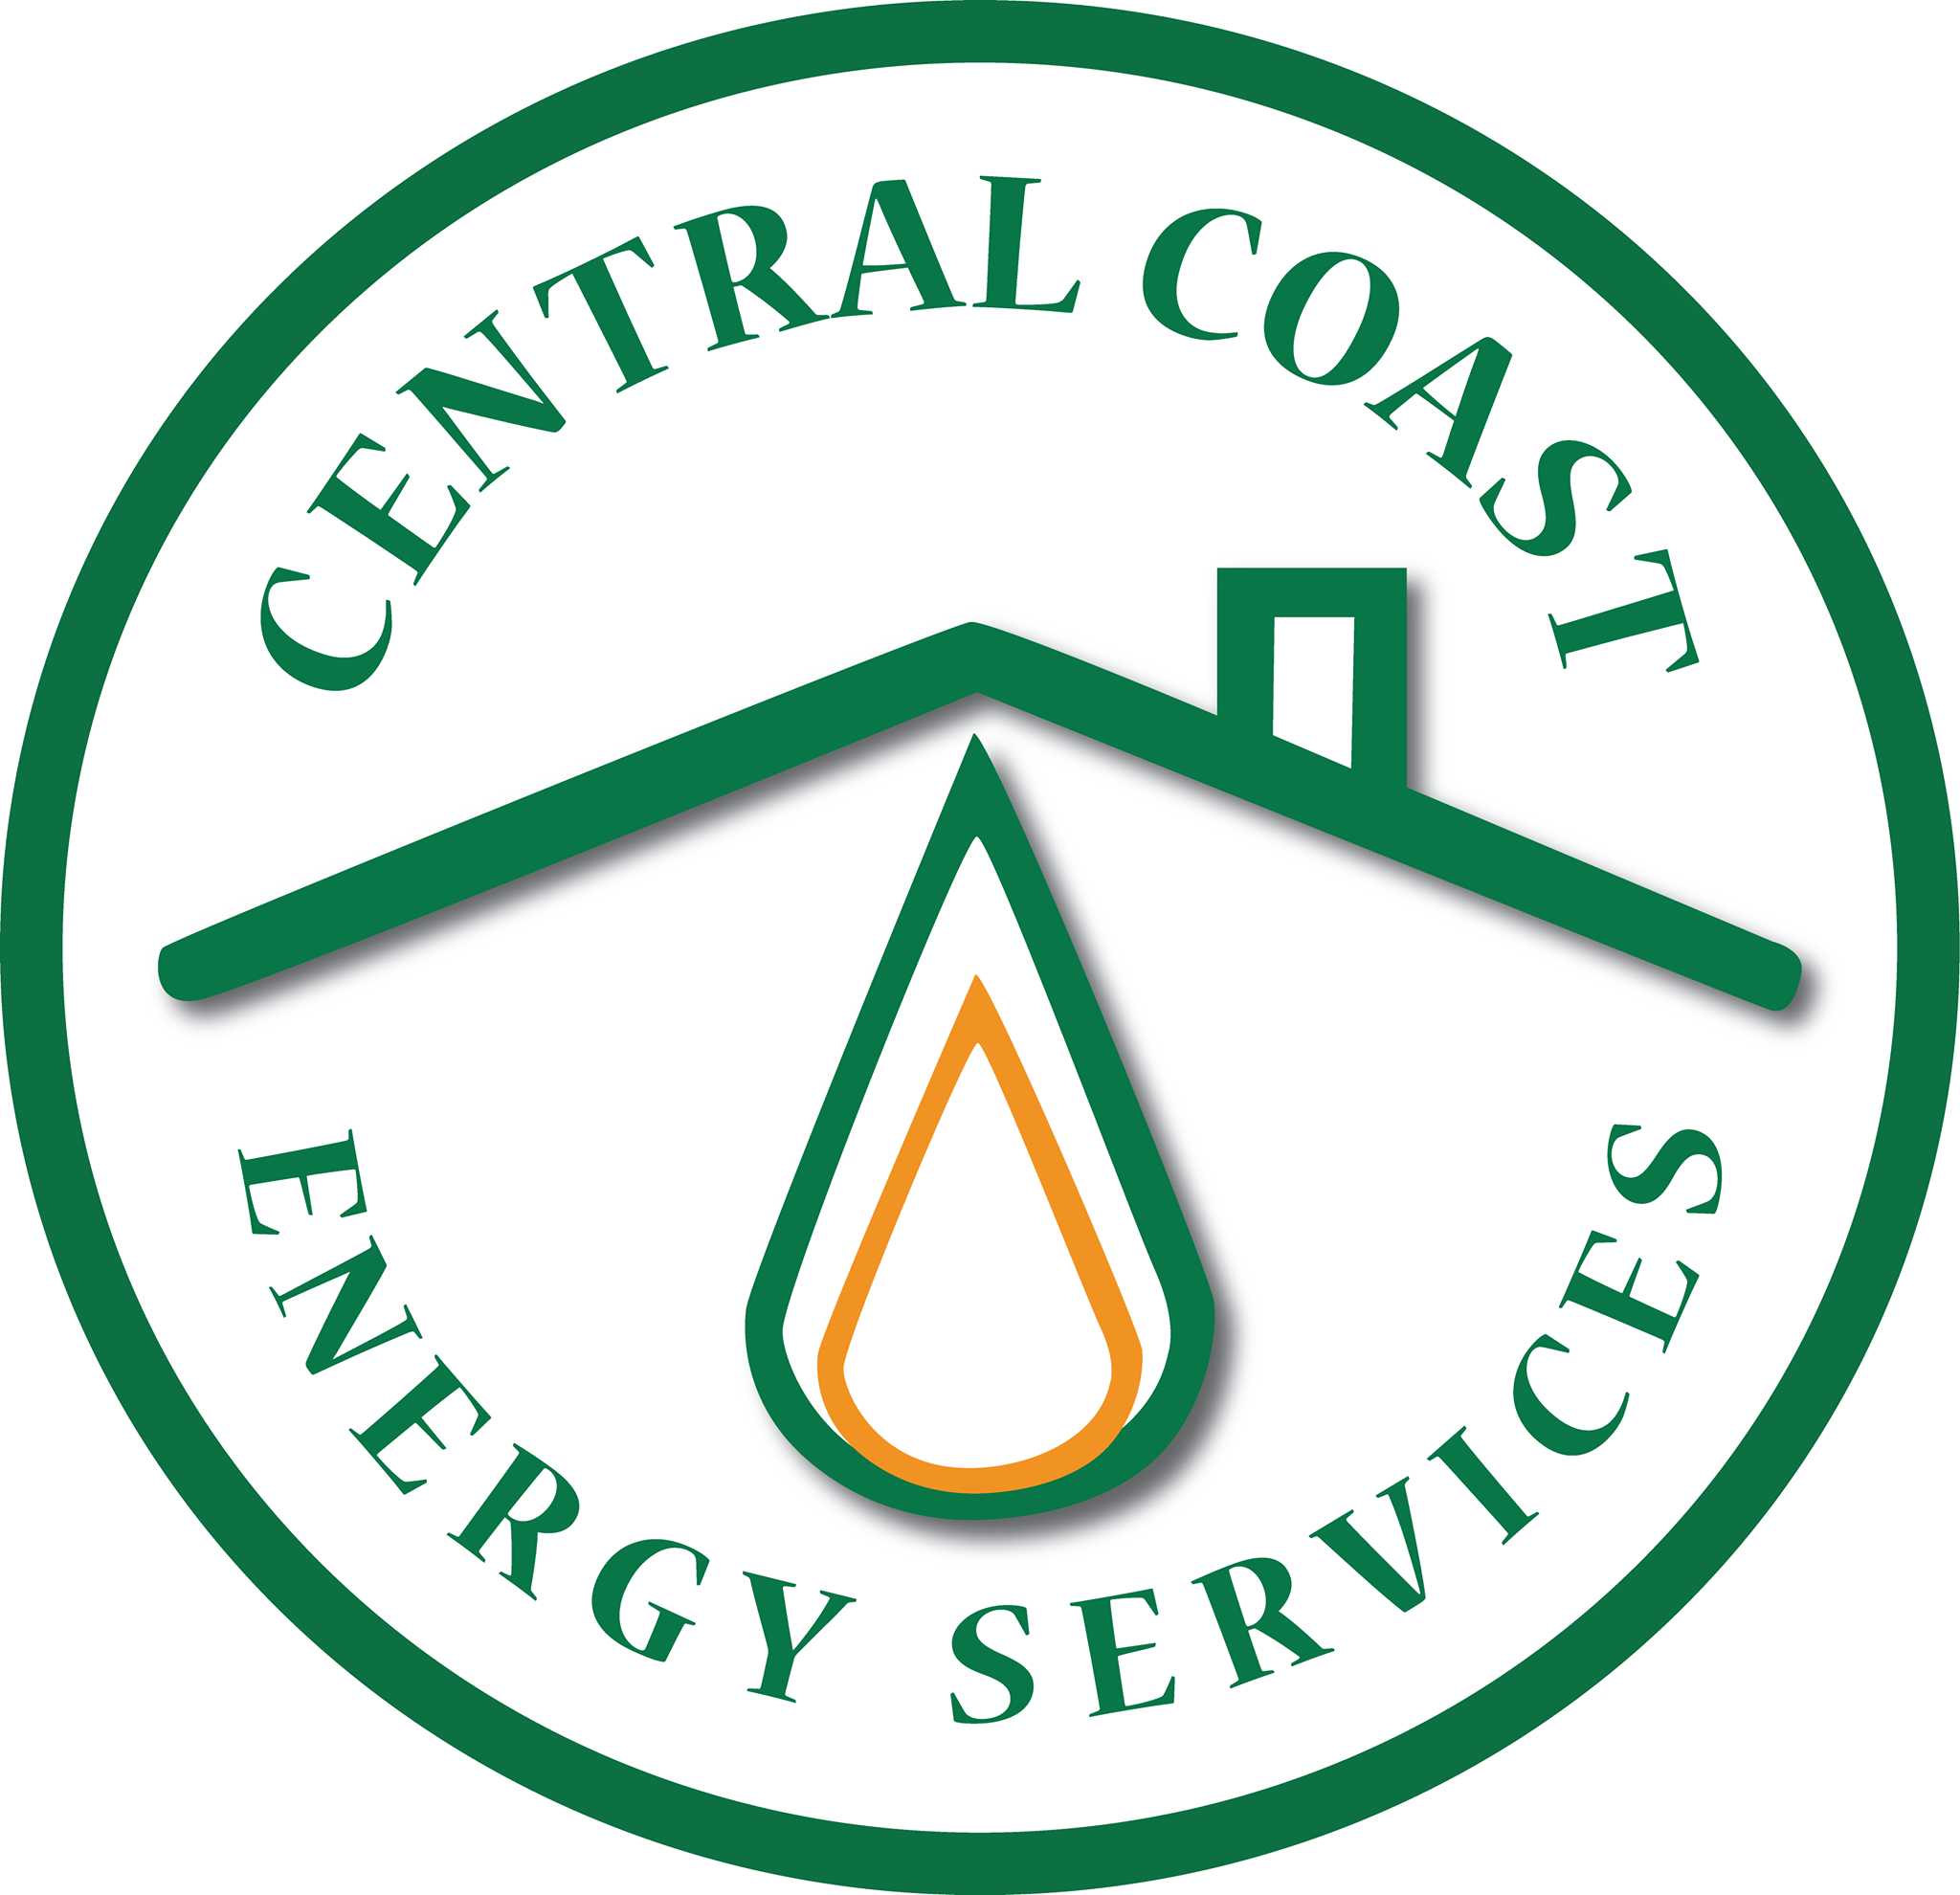 Central Coast Energy Services